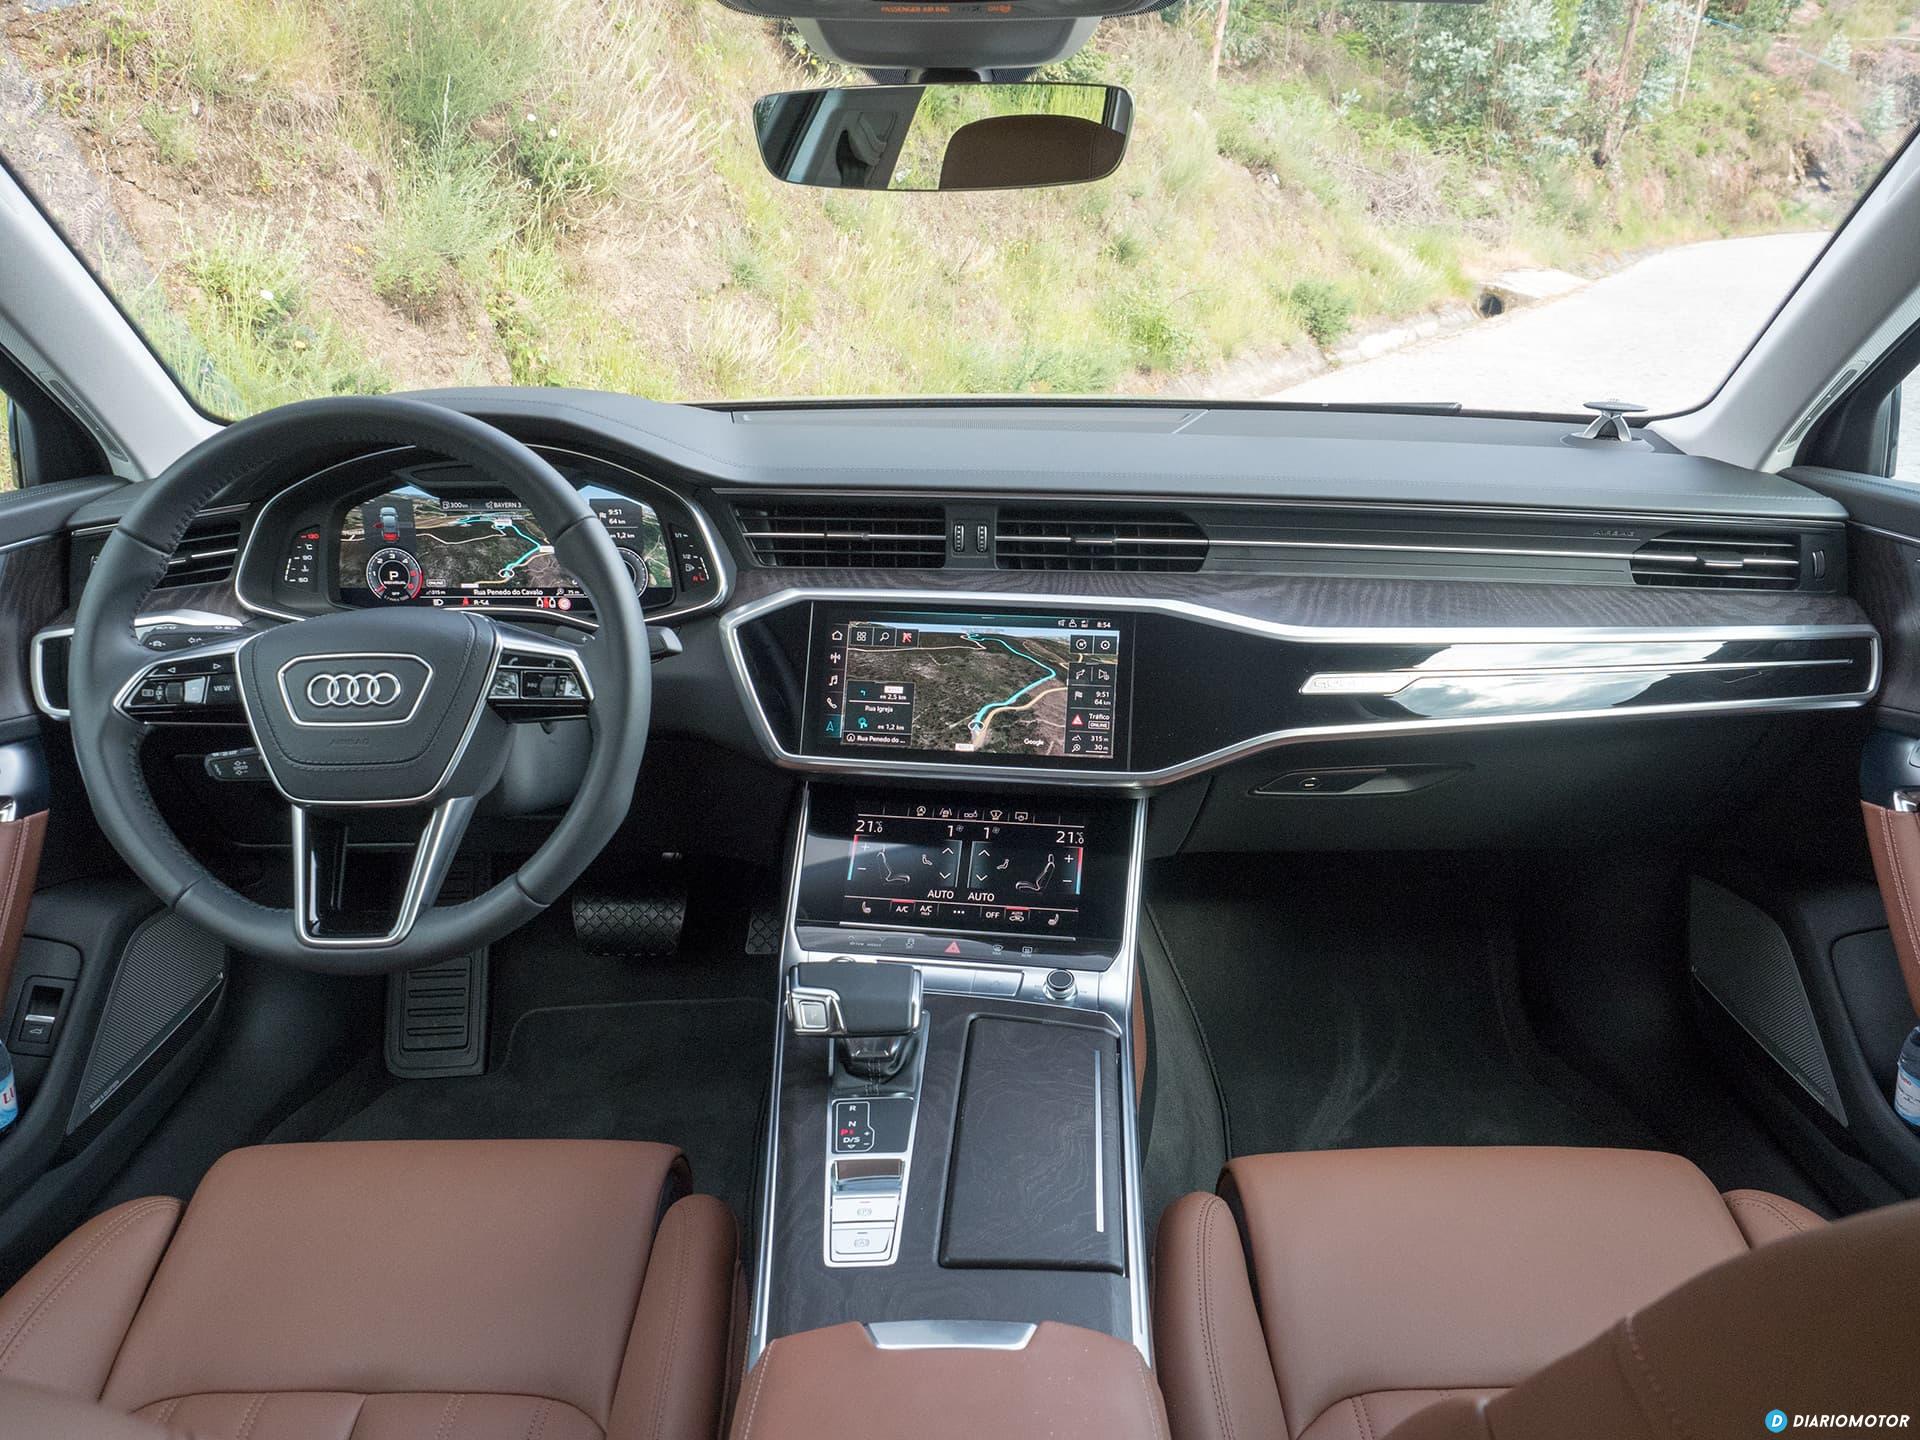 Audi A6 Interior 00001